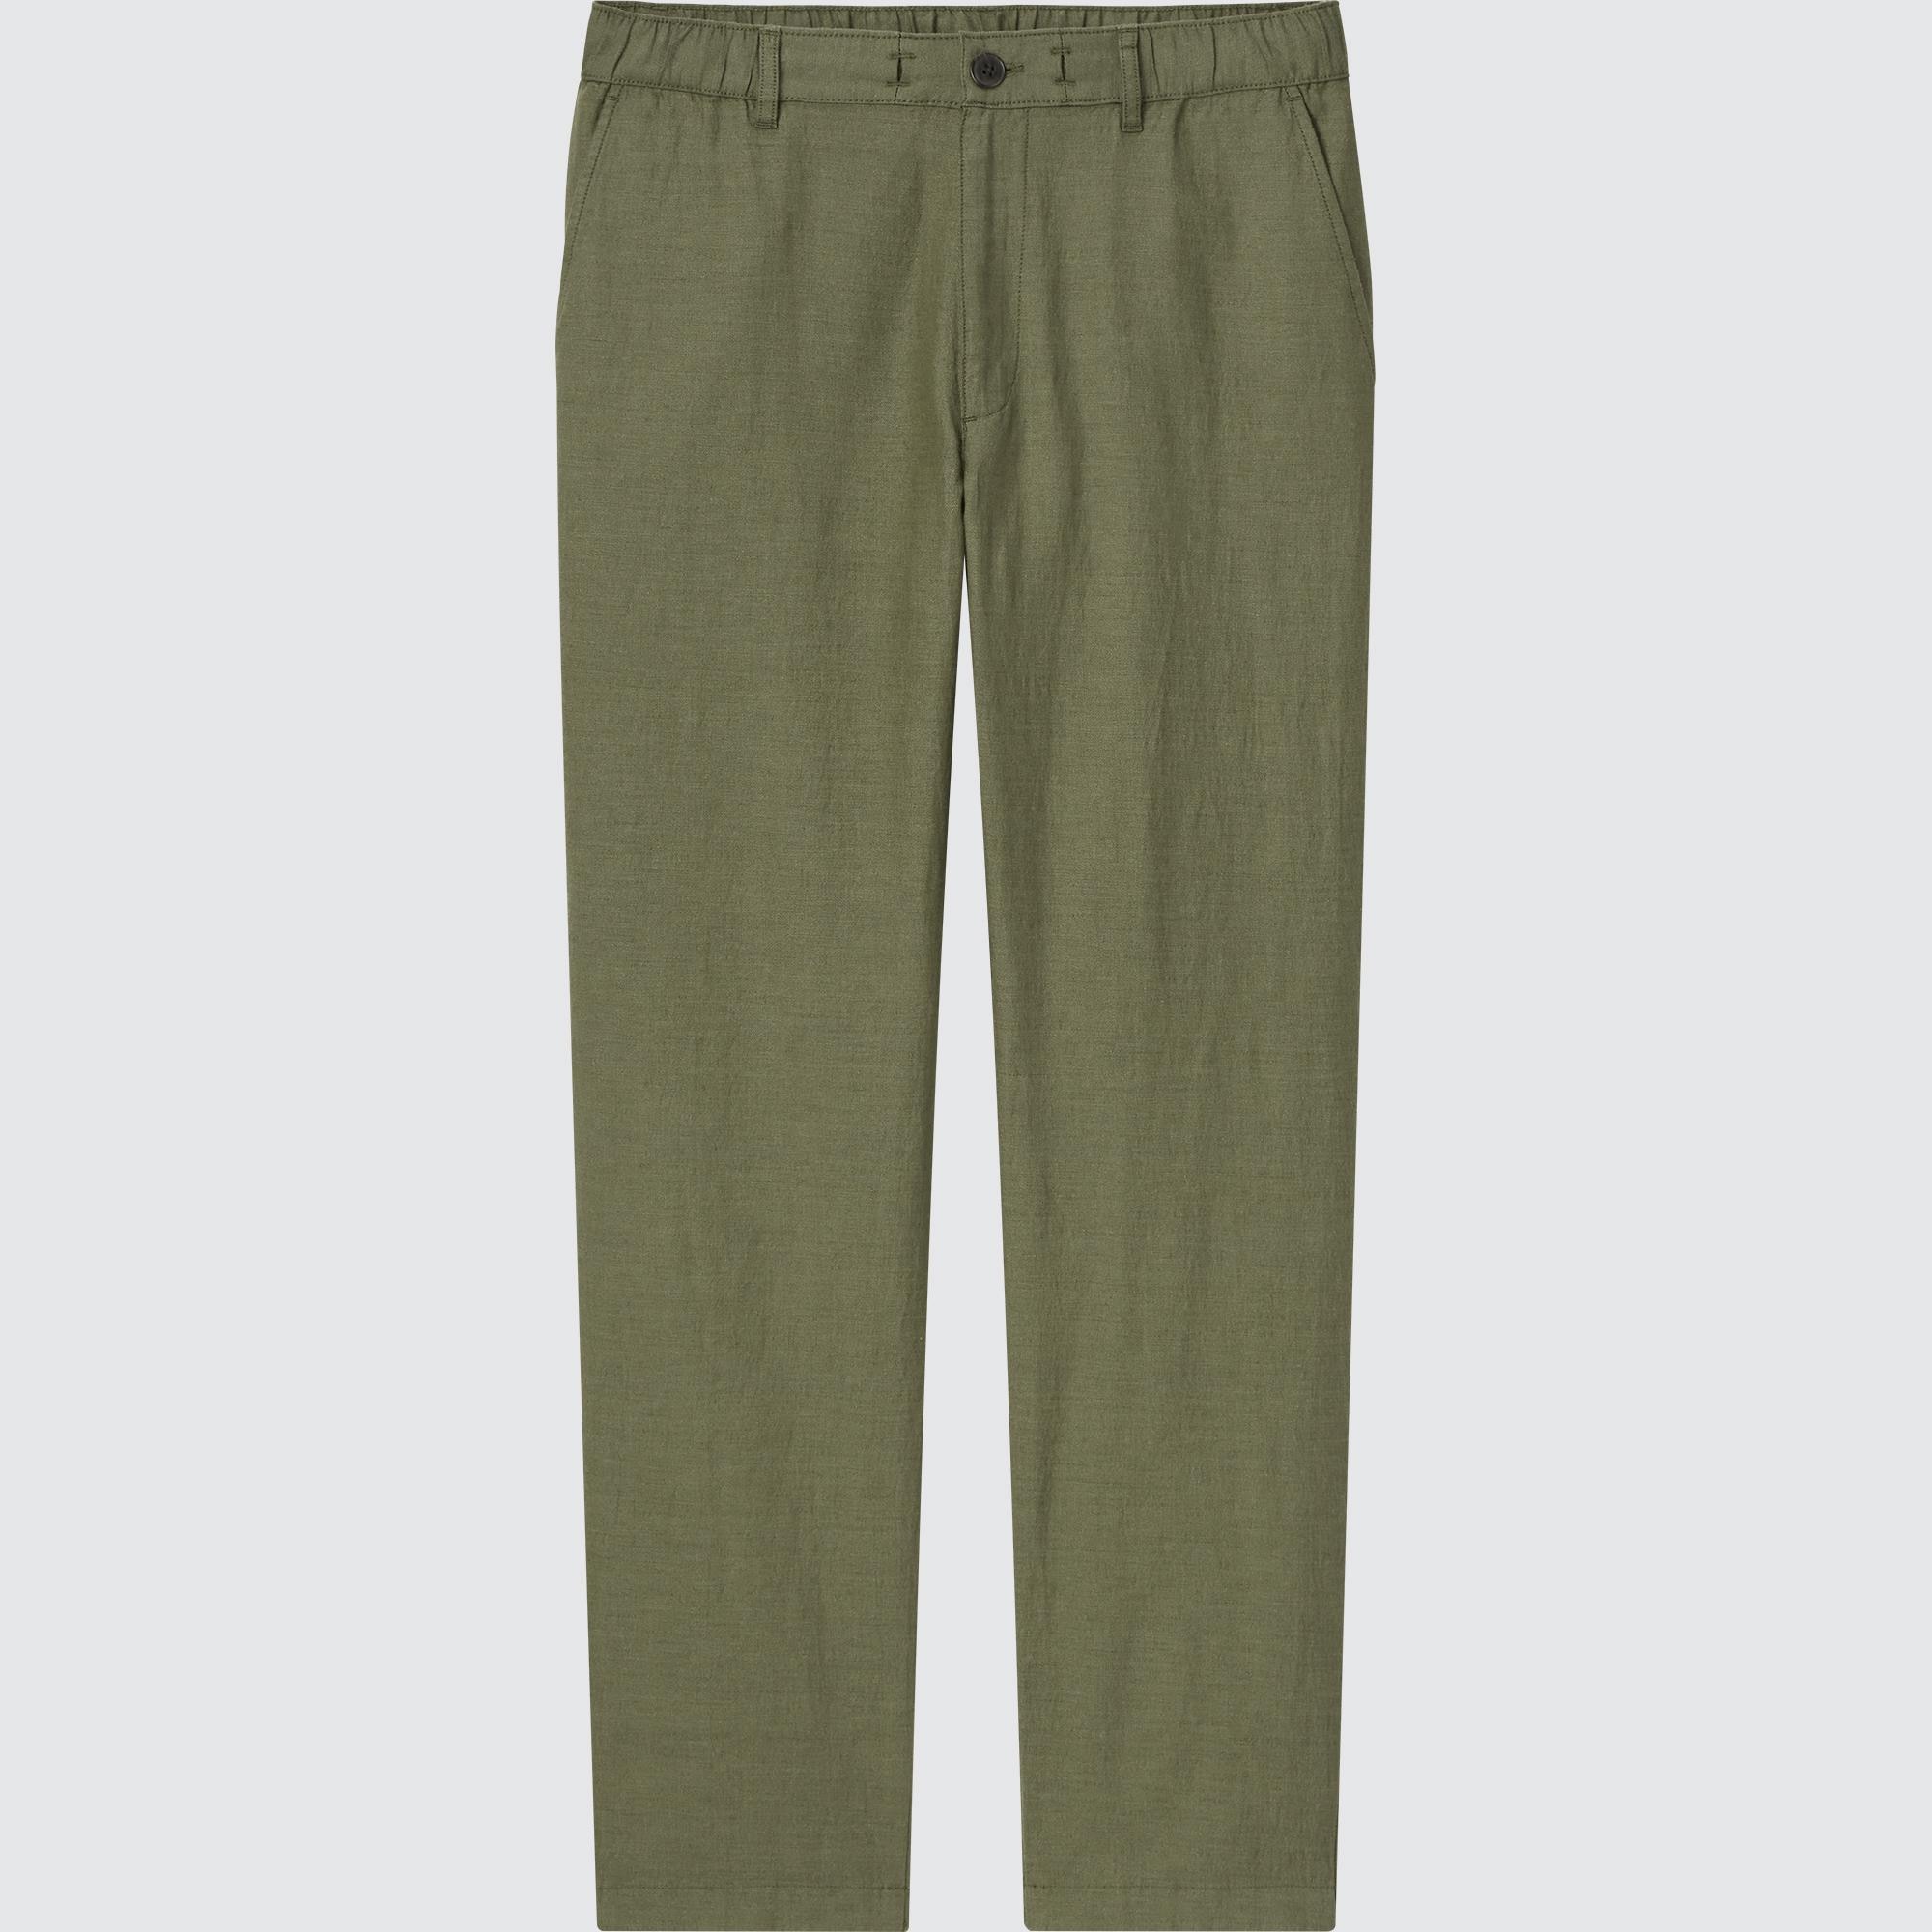 Buy Shoreless Linen Cotton Blend Trousers, Potli Pants (XL, Pink) at  Amazon.in